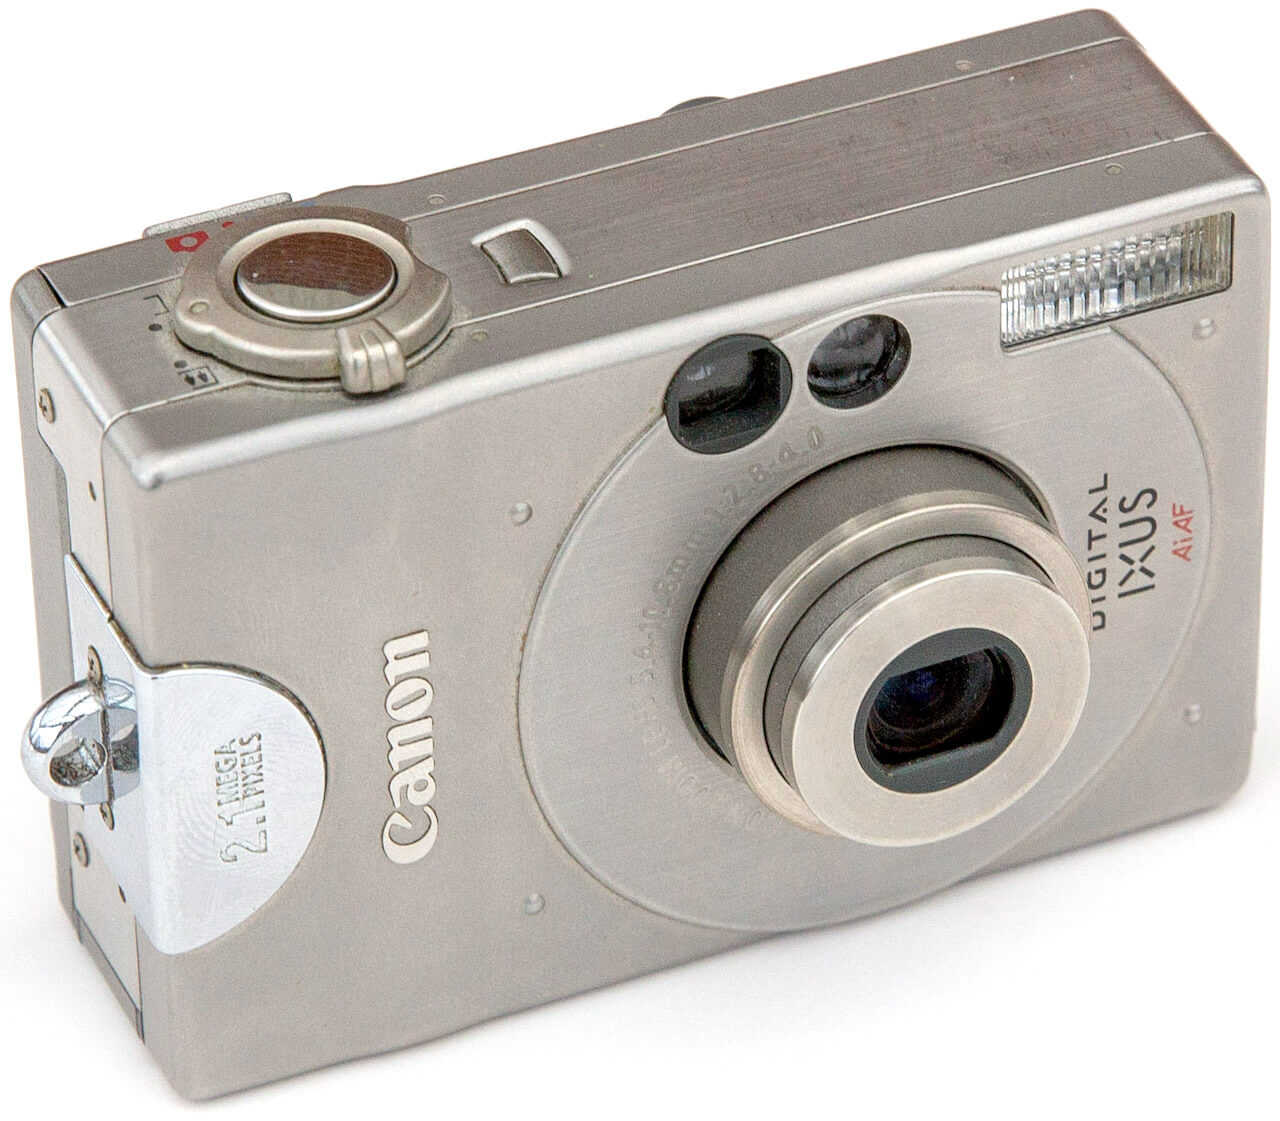 My first digital camera, the Canon Digital Ixus. (41-18)